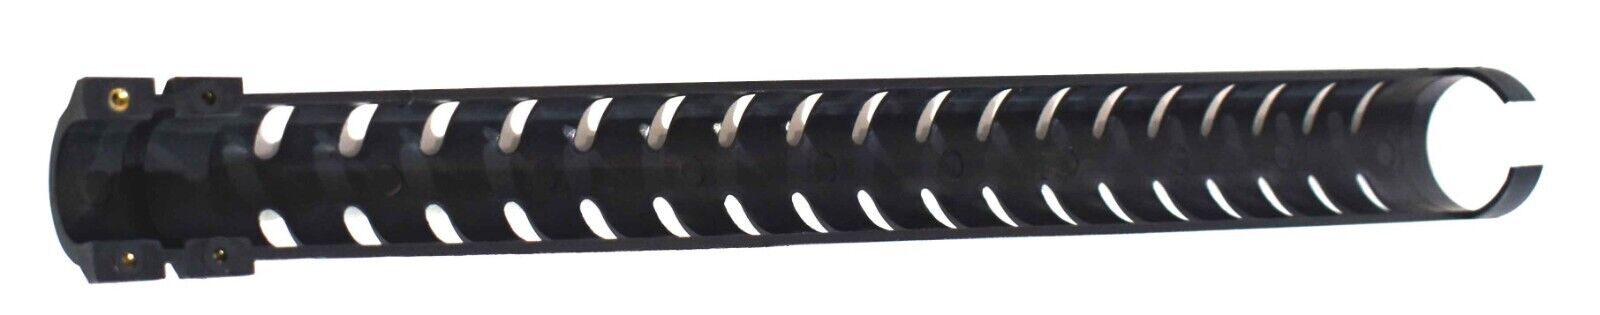 Rock Island Armory Meriva Pump 12 gauge smooth barrels heatshield polymer black. - TRINITY SUPPLY INC